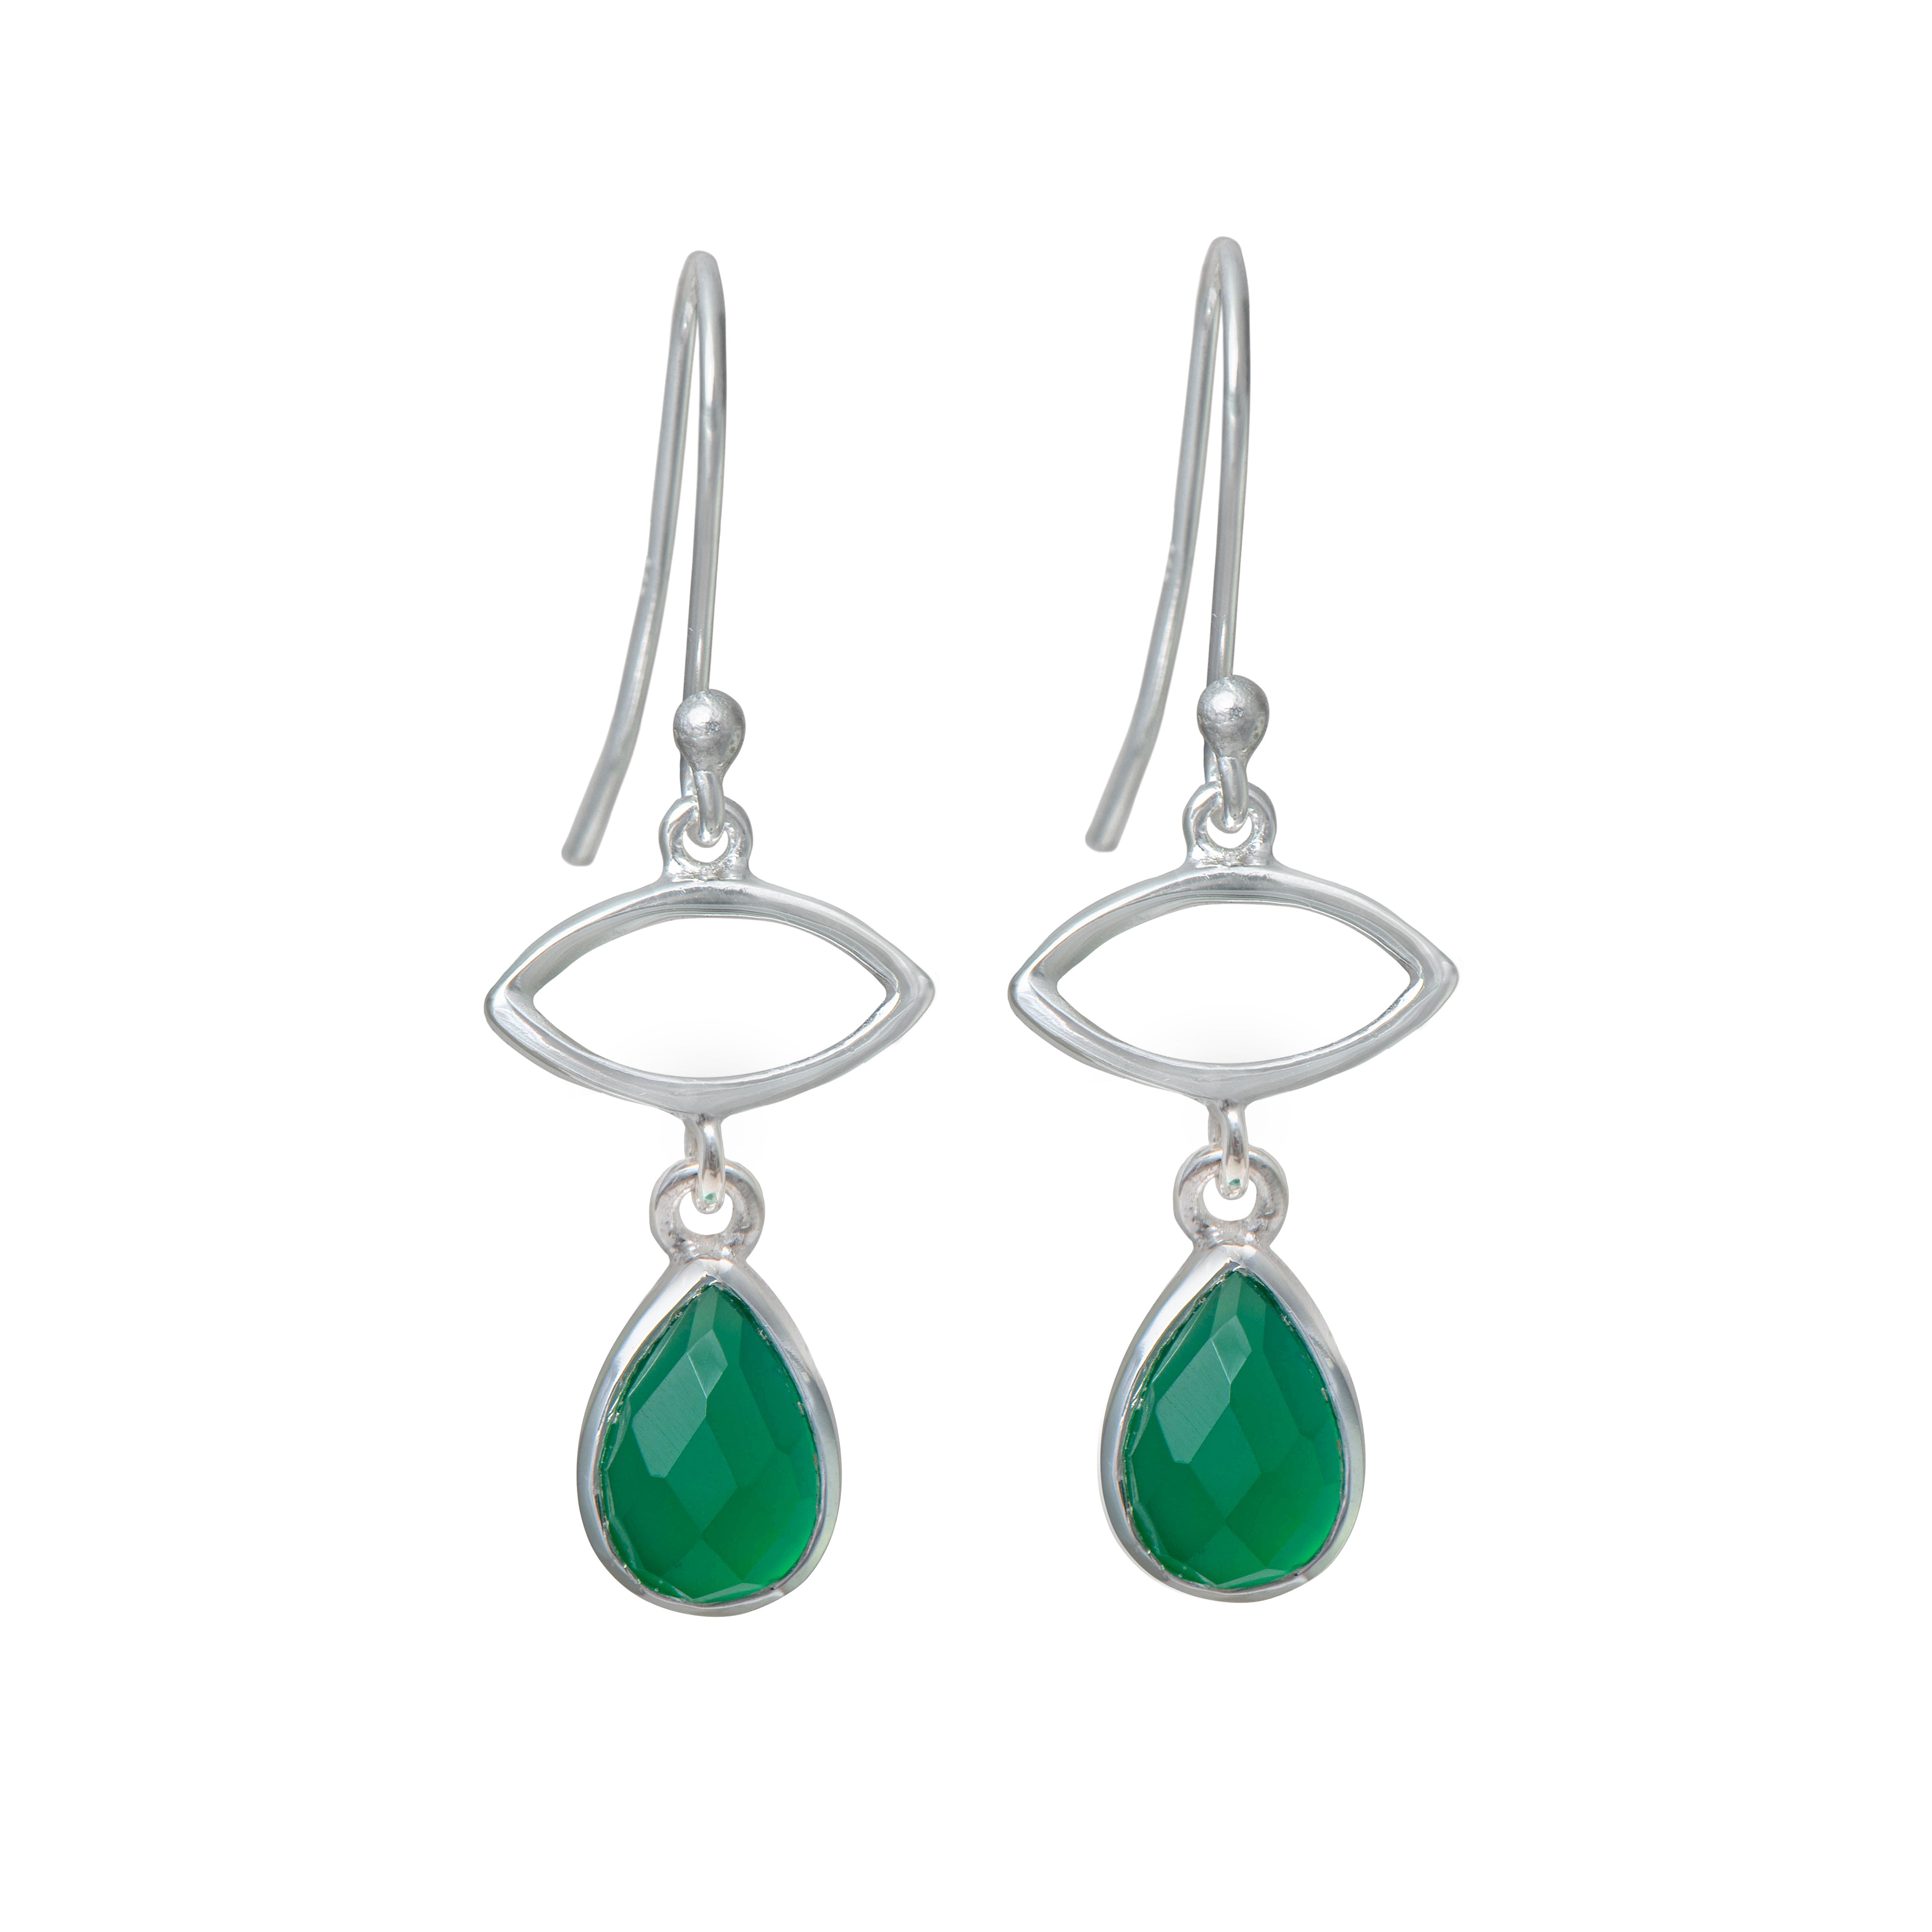 Silver Drop Earrings with Green Onyx Gemstone